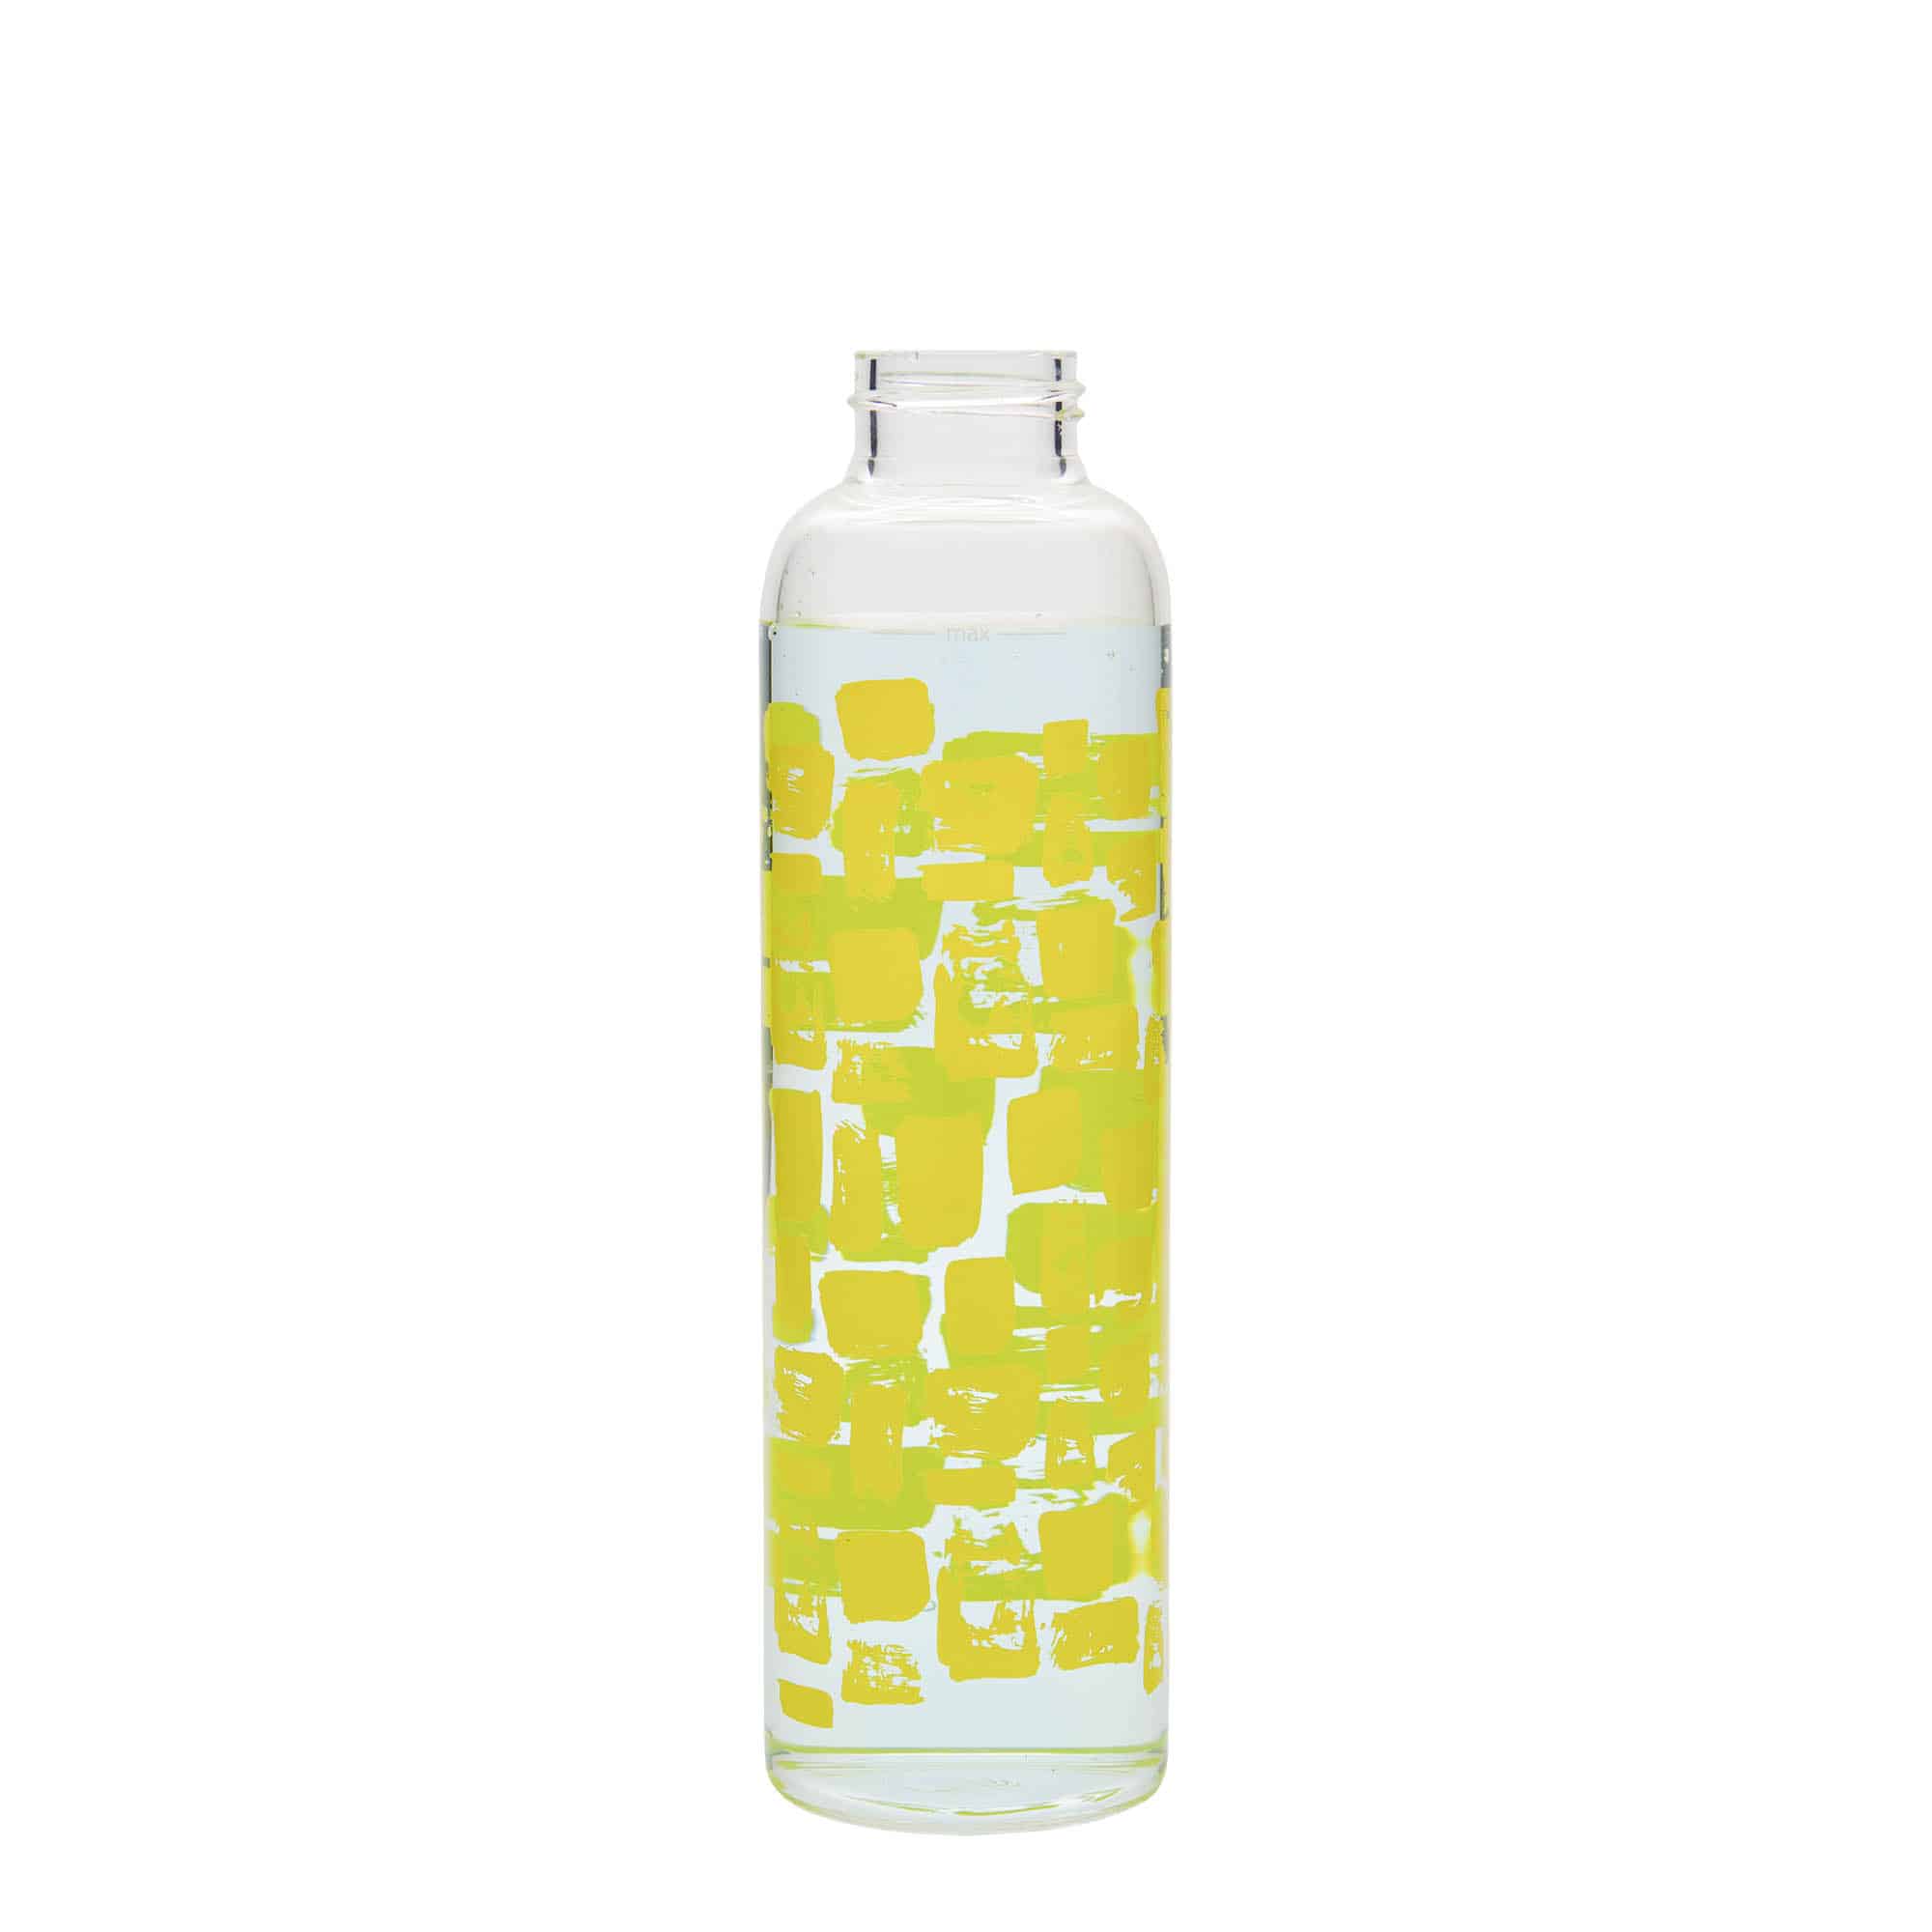 500 ml water bottle 'Perseus', print: yellow rectangles, closure: screw cap